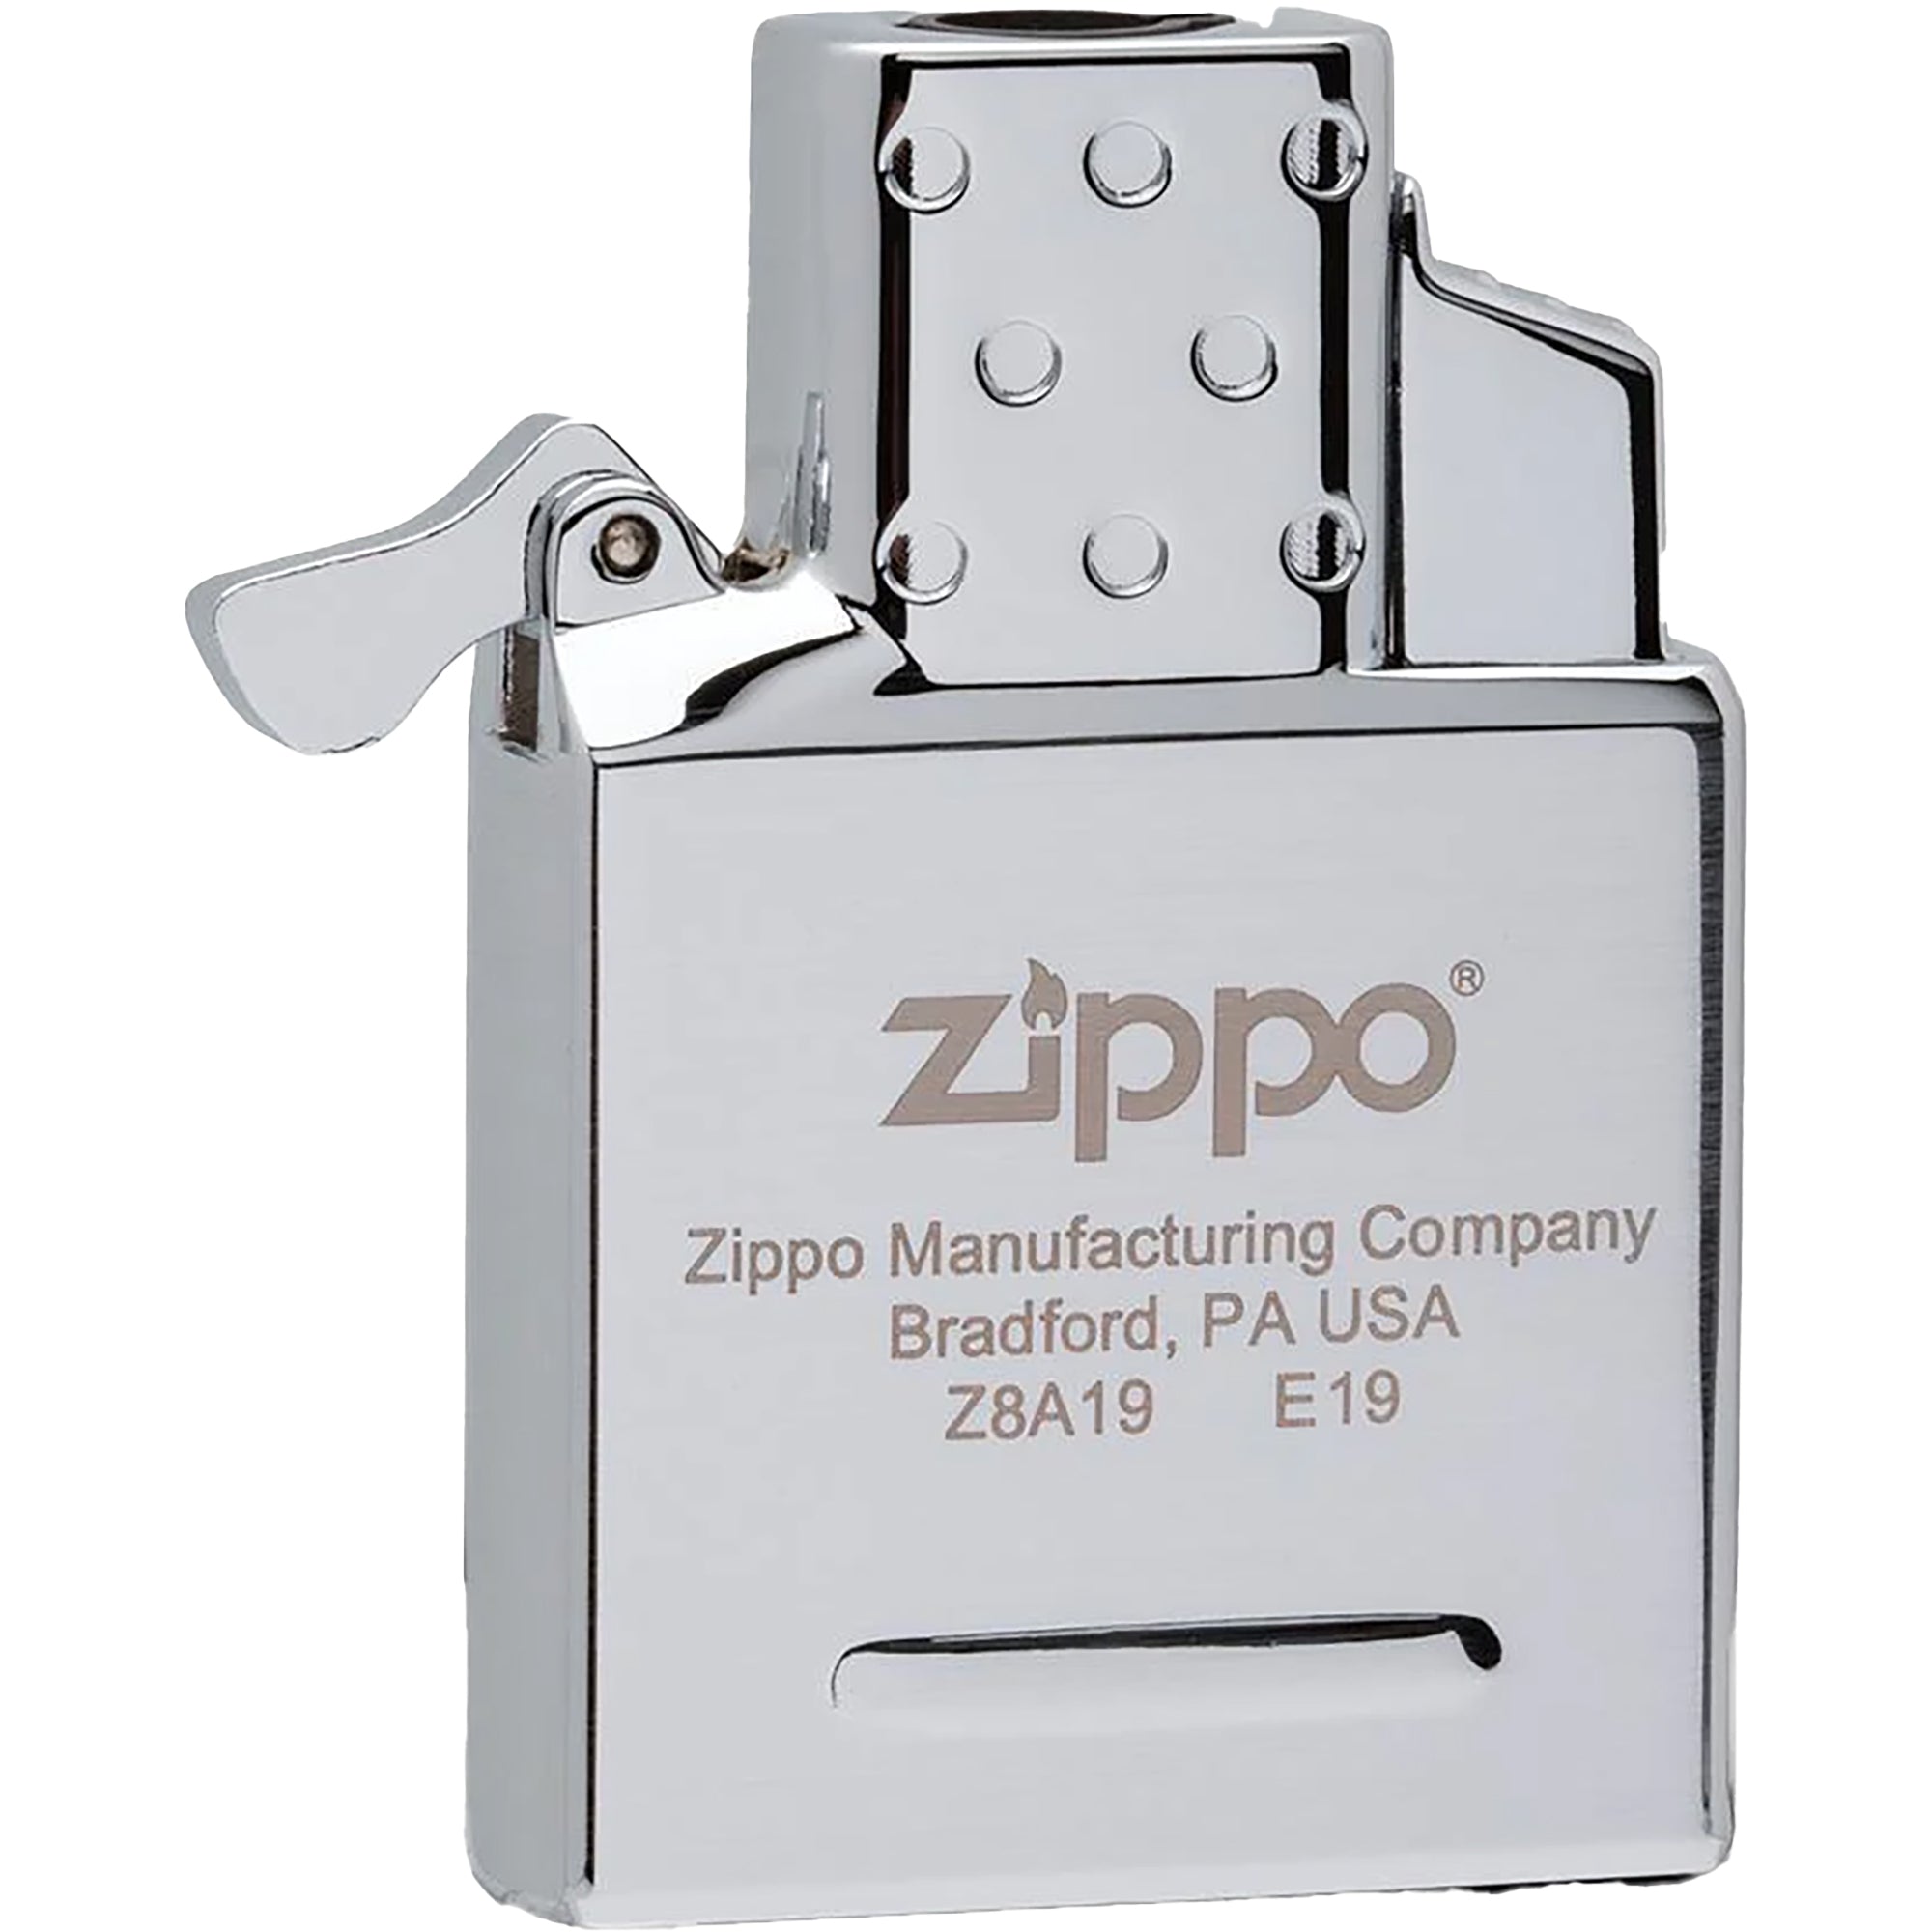 Zippo Double Torch Butane Lighter Insert - Stainless Steel Zippo